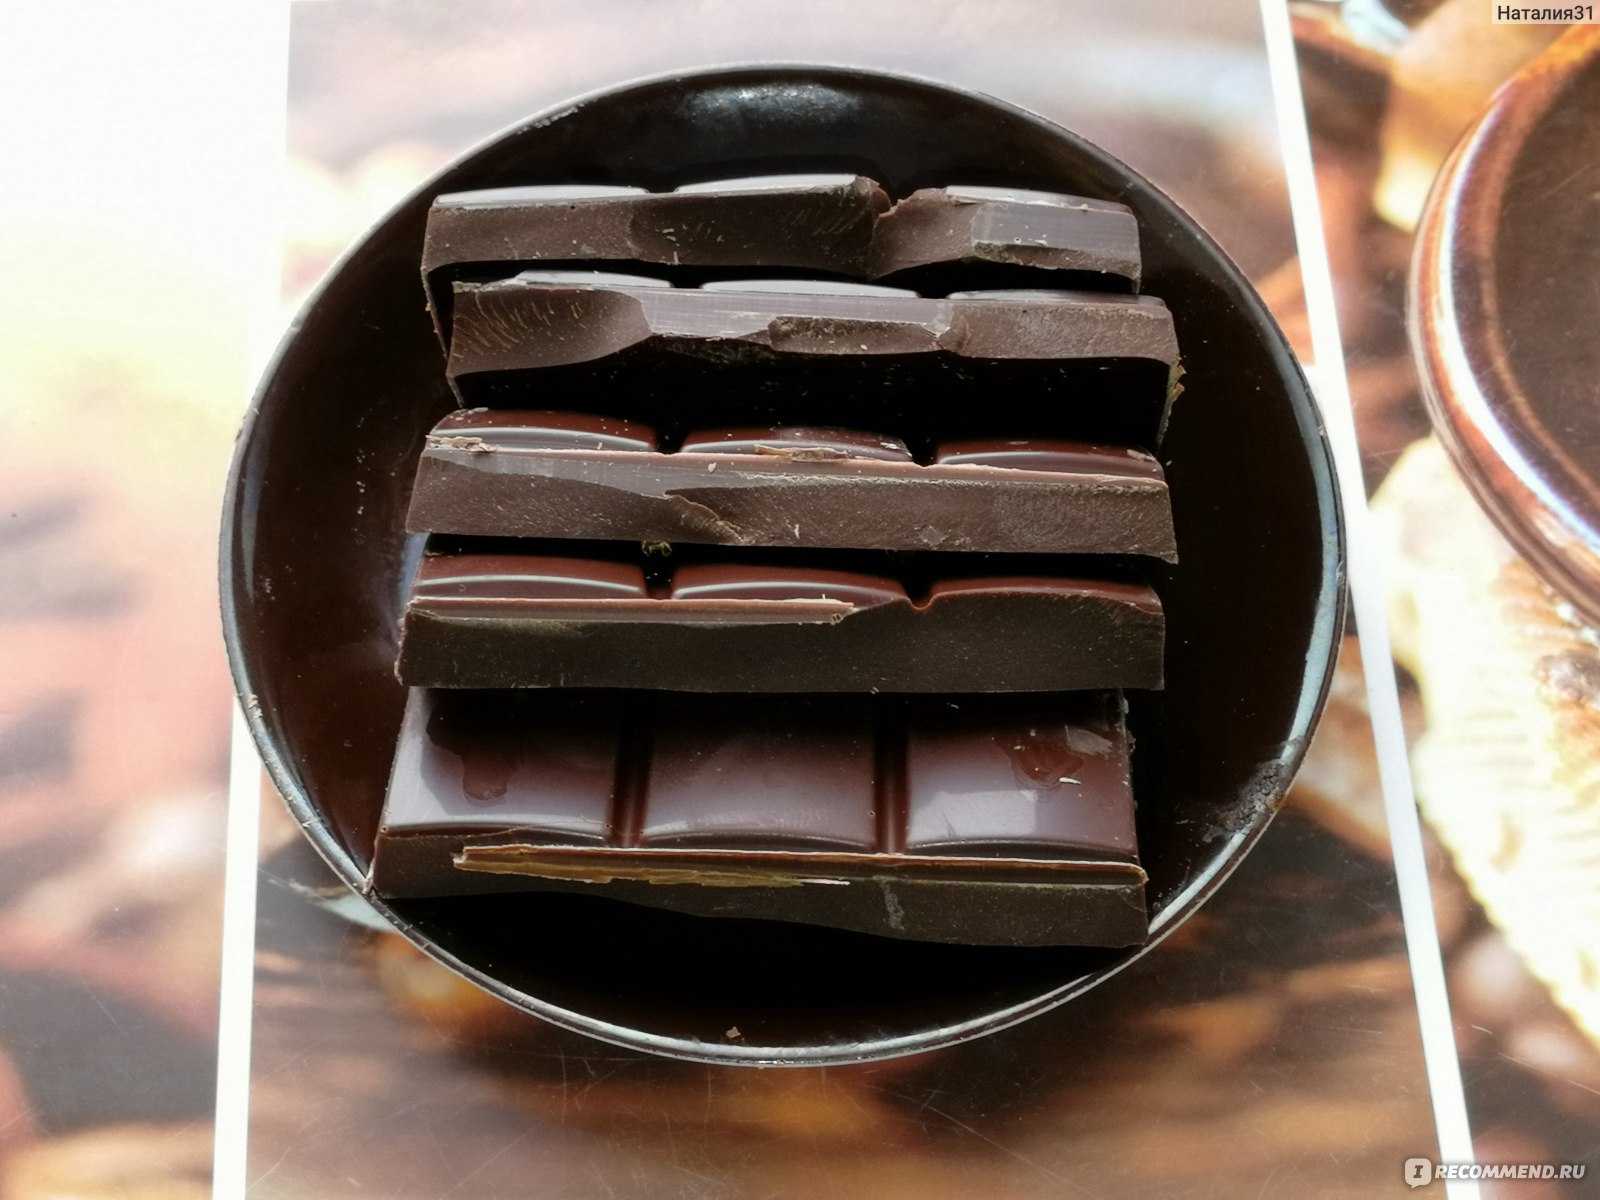 Шоколад без добавок. Темный шоколад 45-59% какао. Топленый шоколад. Шоколад тёмный "классический".